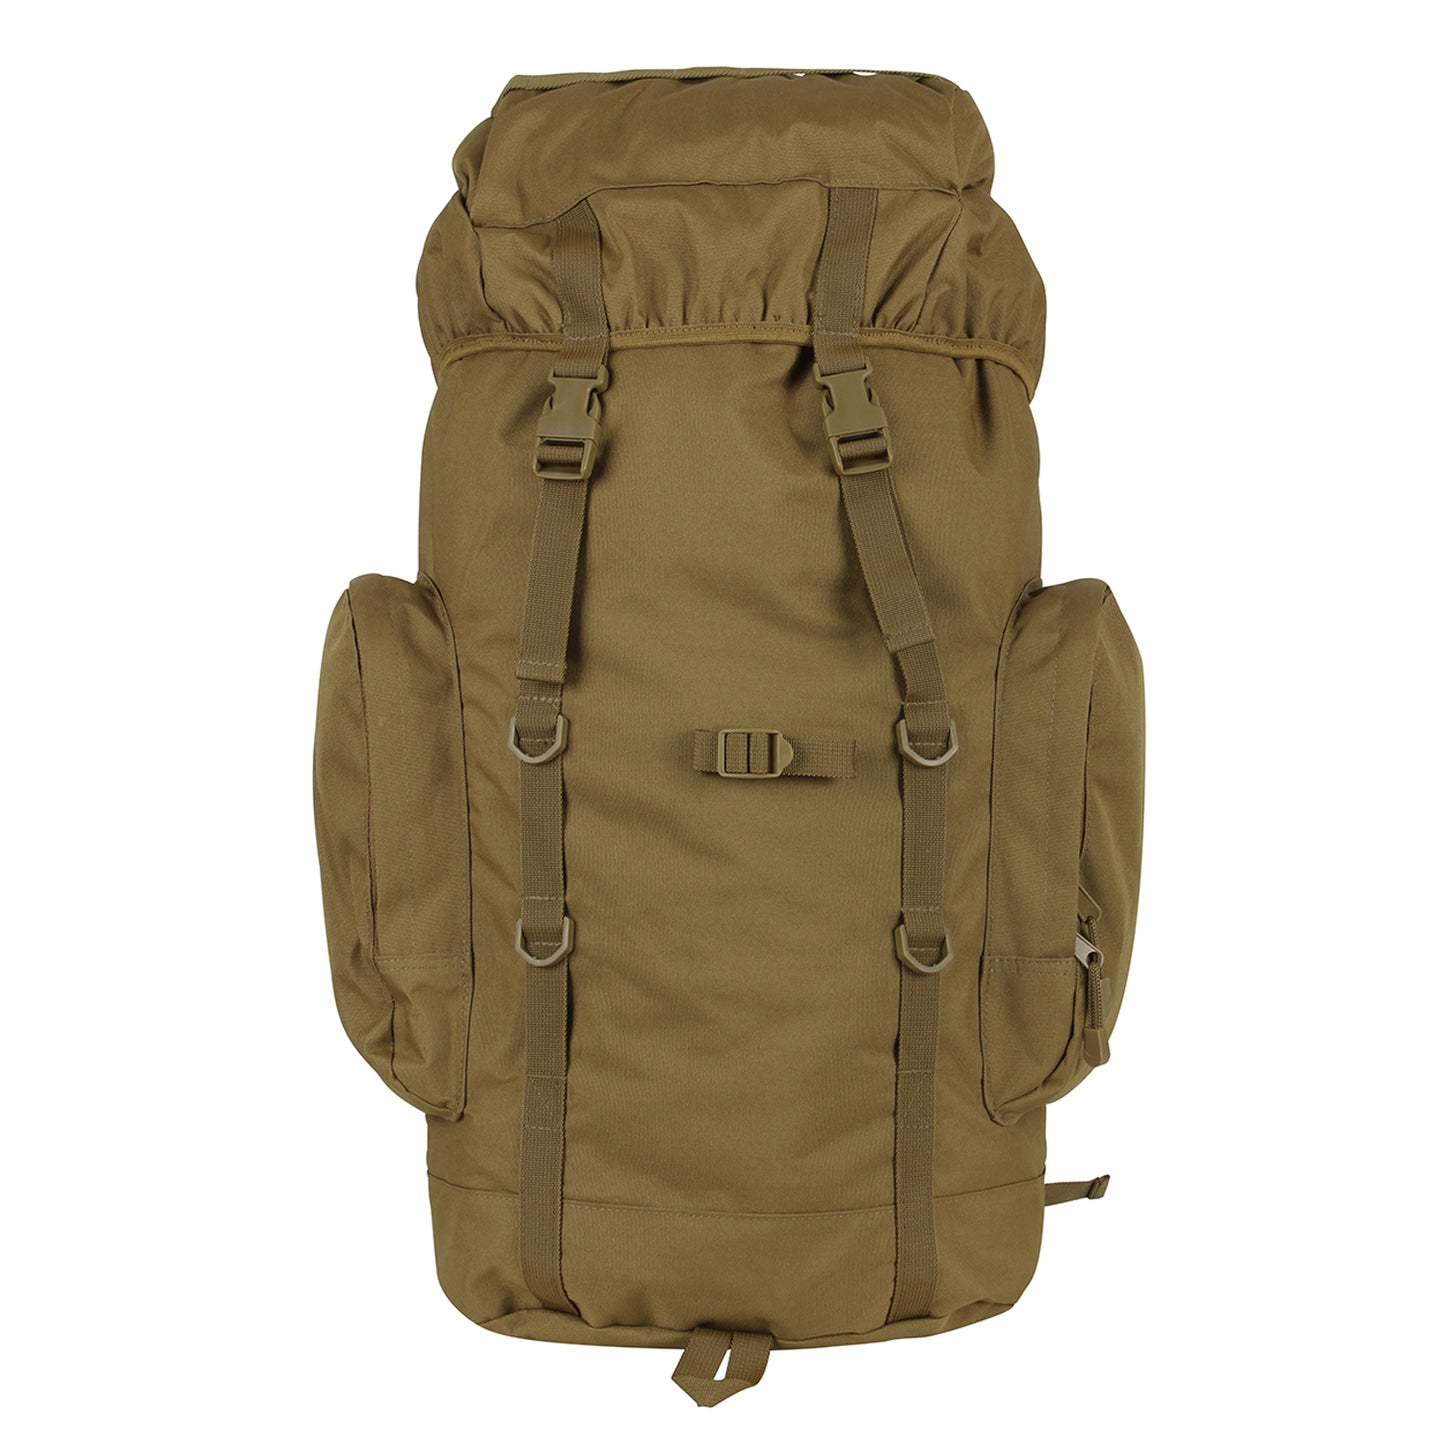 Milspec 45L Tactical Backpack Tactical Packs MilTac Tactical Military Outdoor Gear Australia